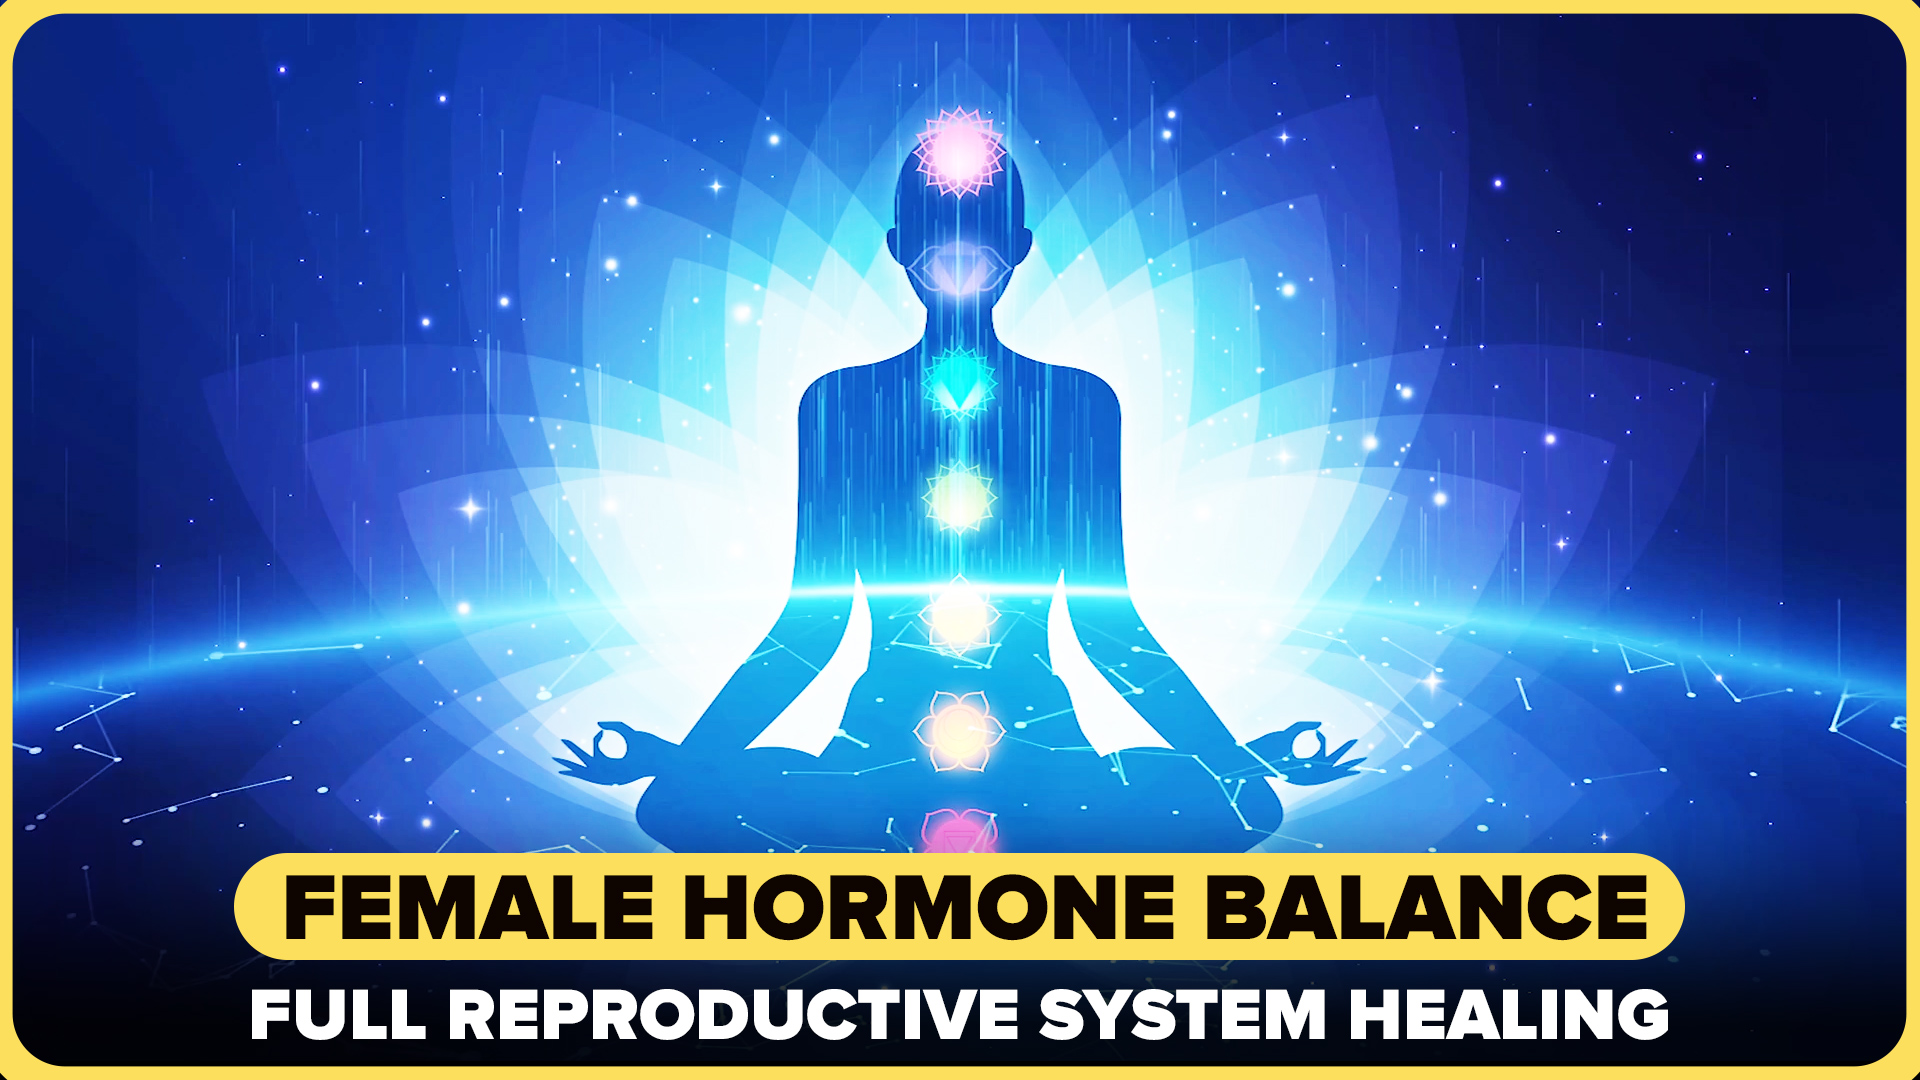 female hormone balance, full reproductive system healing binaural beats meditation music